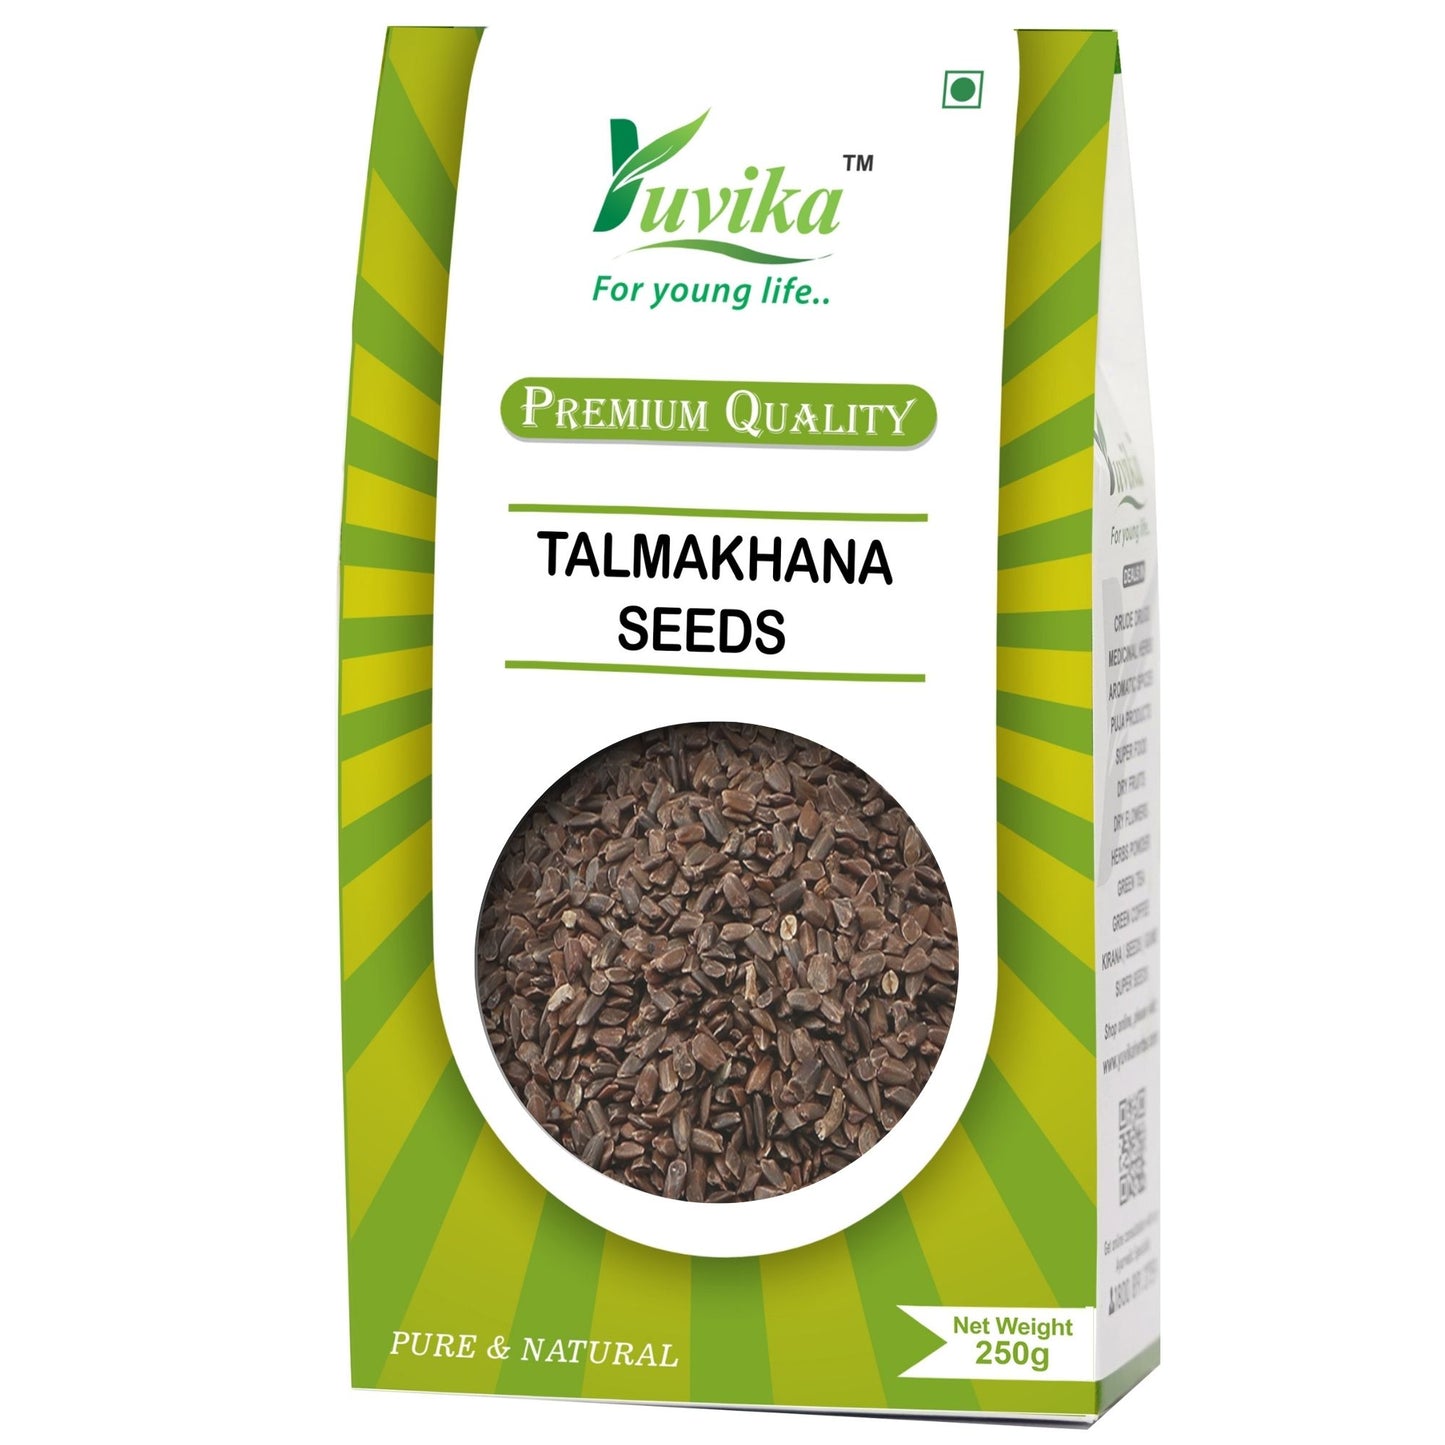 Talmakhana Seeds - Astercantha Longifolia (250g)